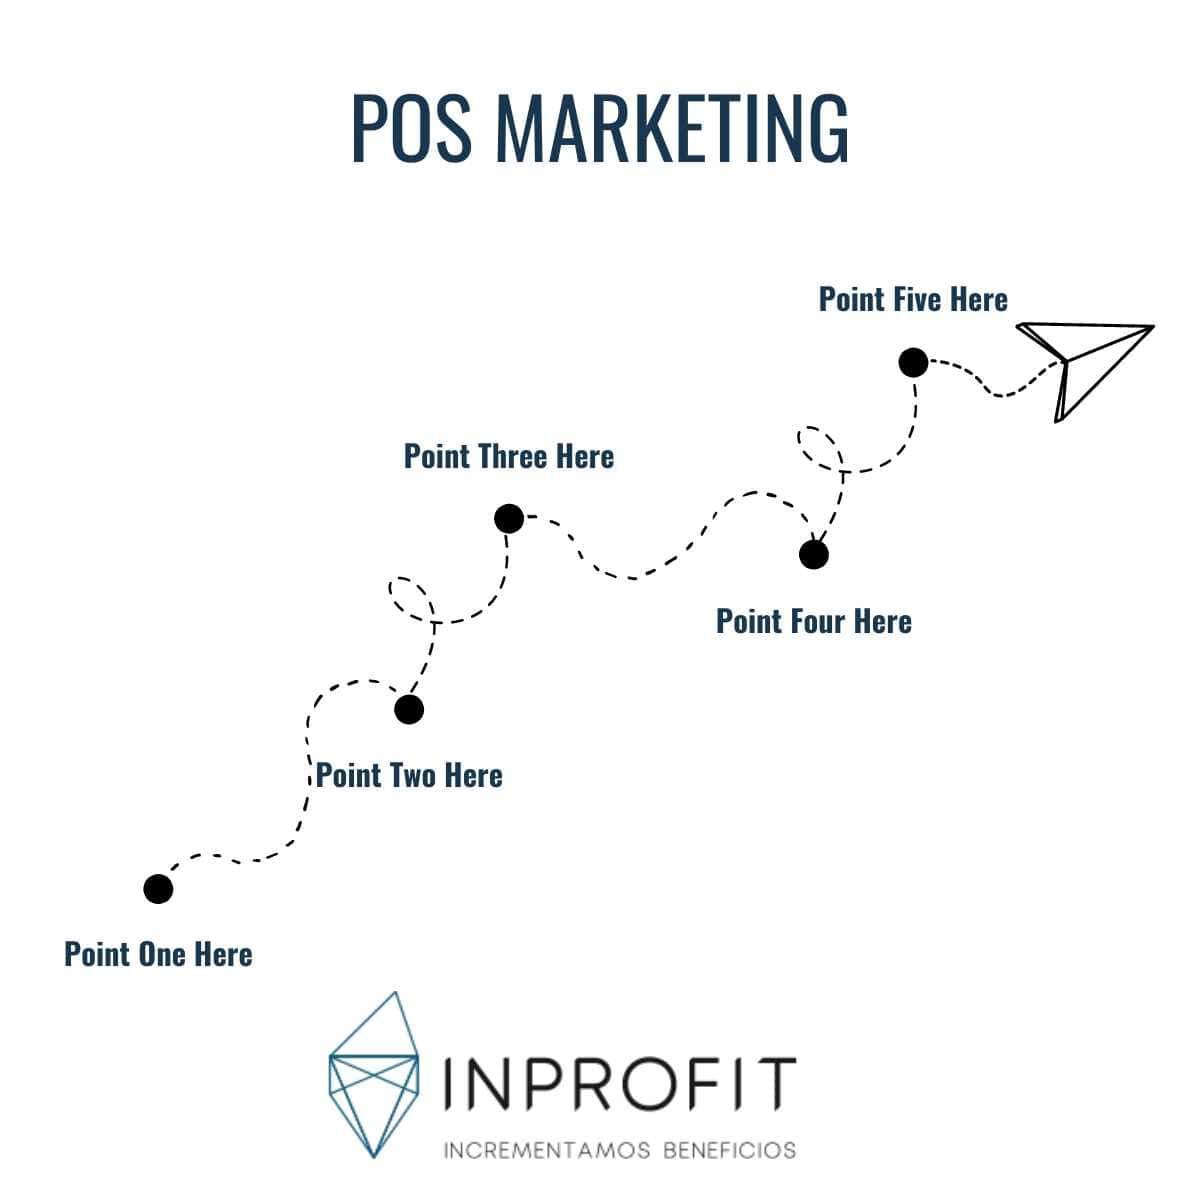 Point of Sale Marketing: POS Marketing